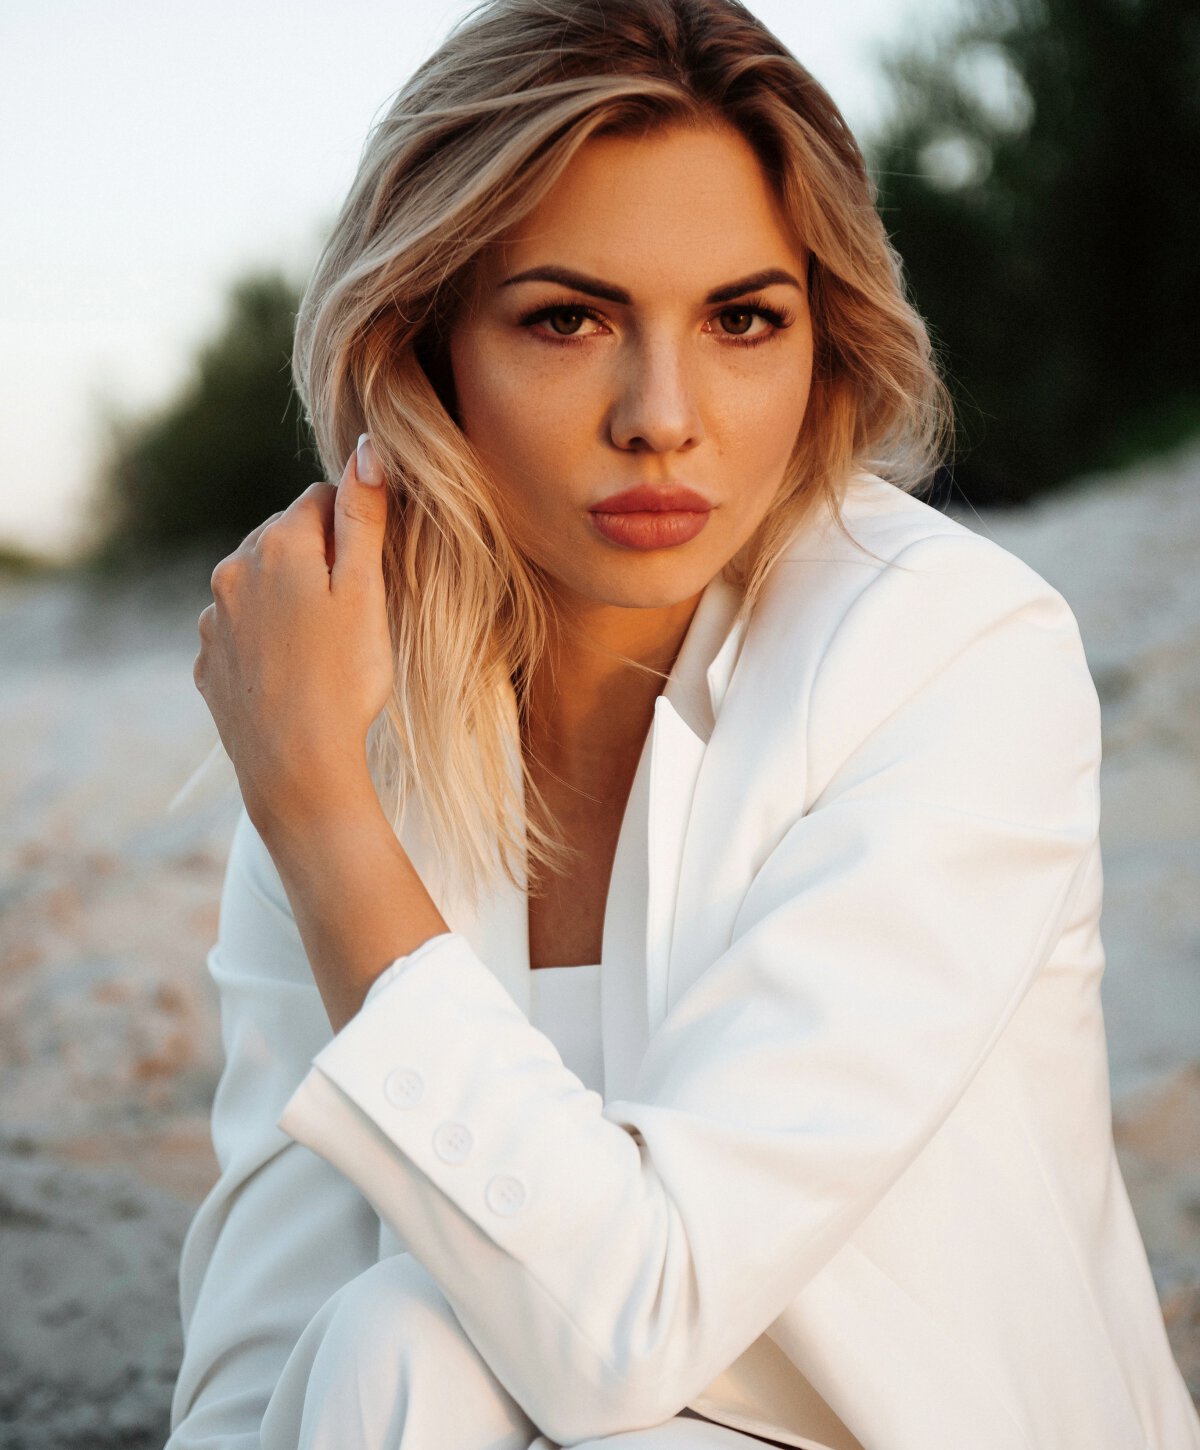 Carolina Juvederm model with blonde hair